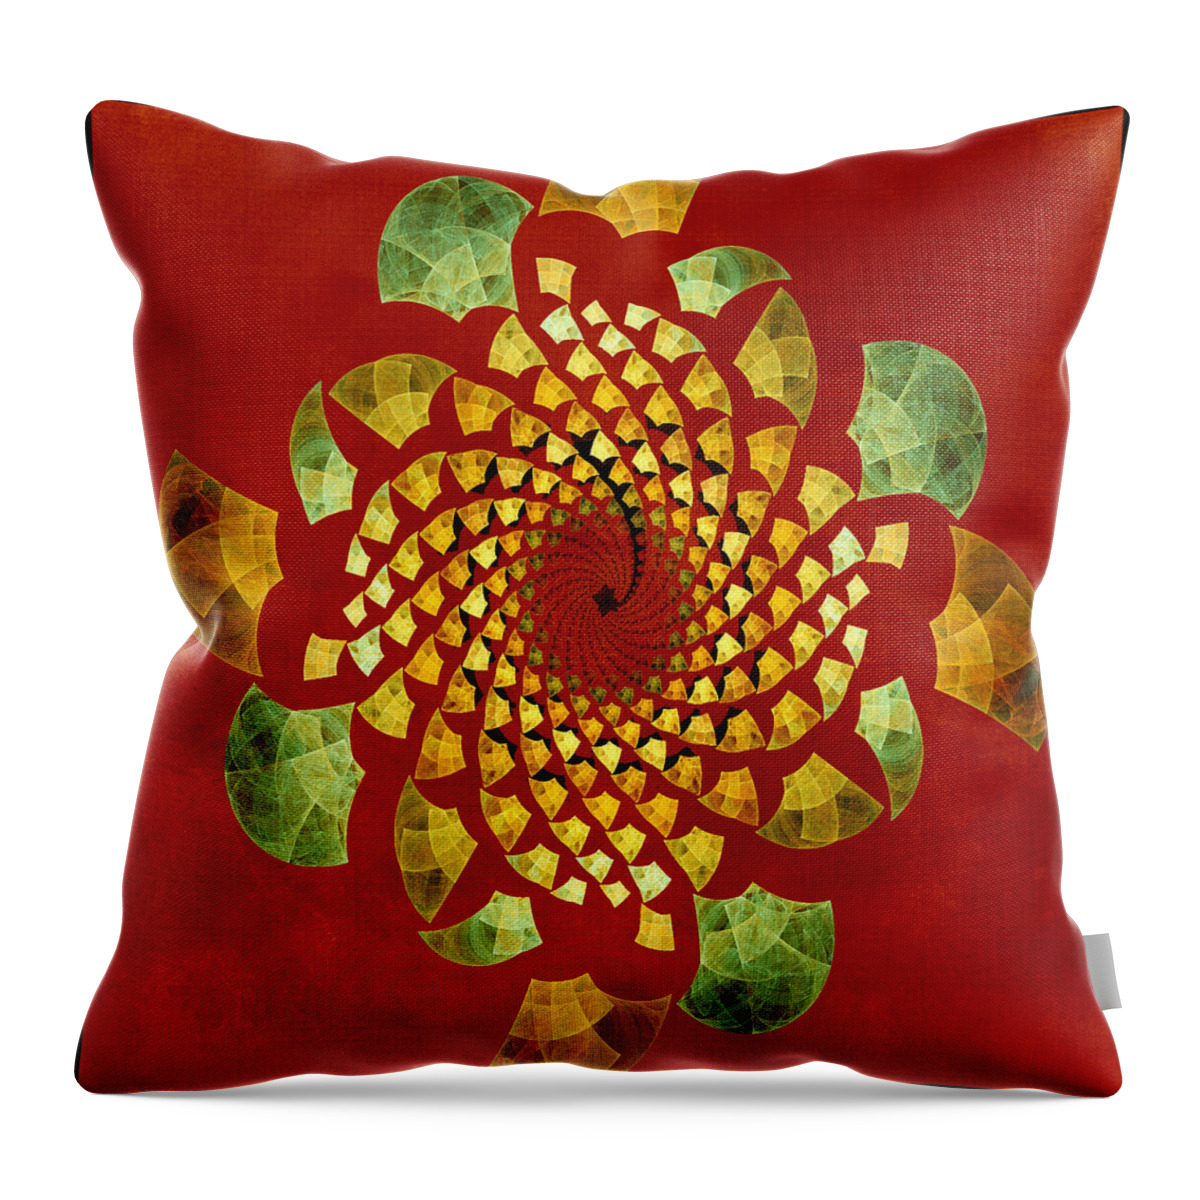 Geometric Throw Pillow featuring the digital art Fractal Twirl by Bonnie Bruno